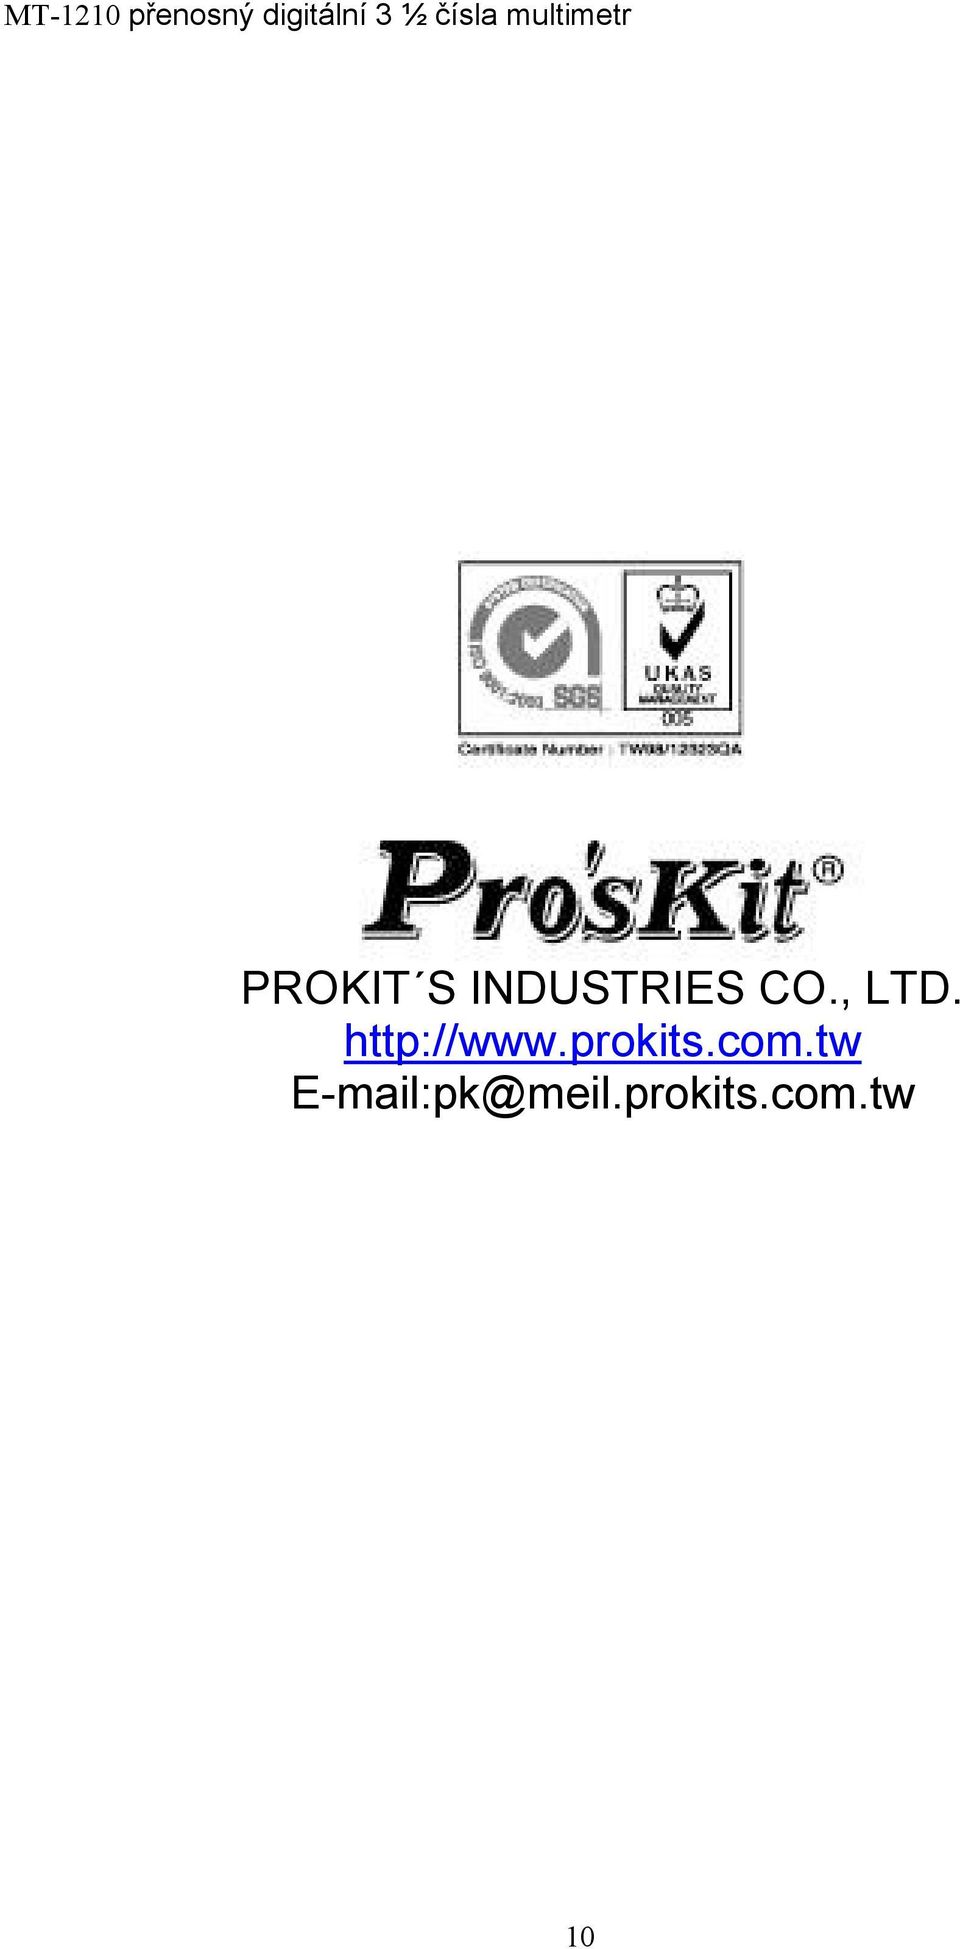 prokits.com.